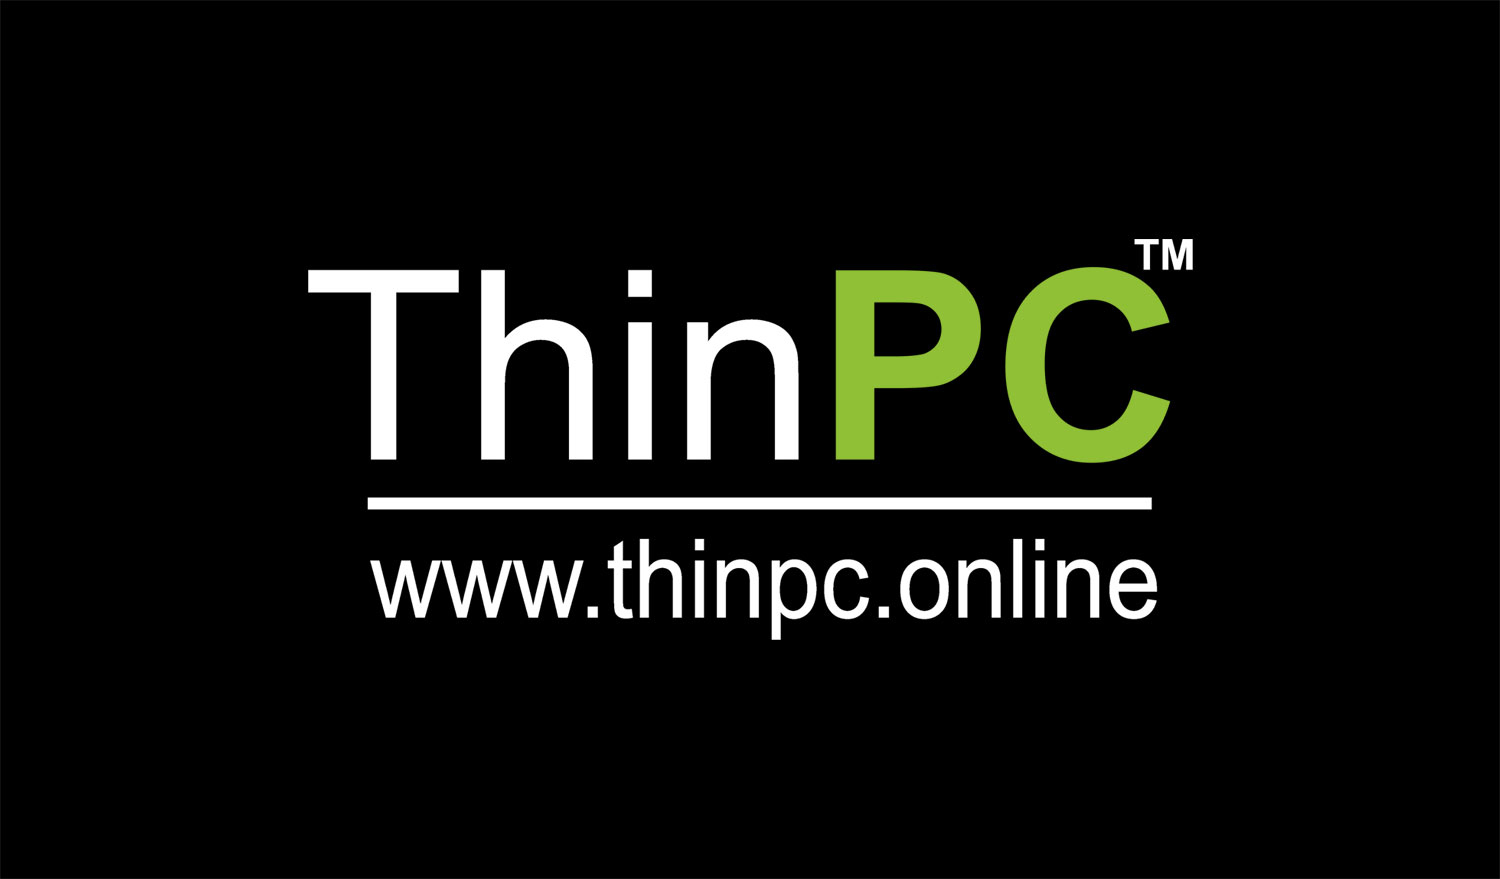 Thinpc logo